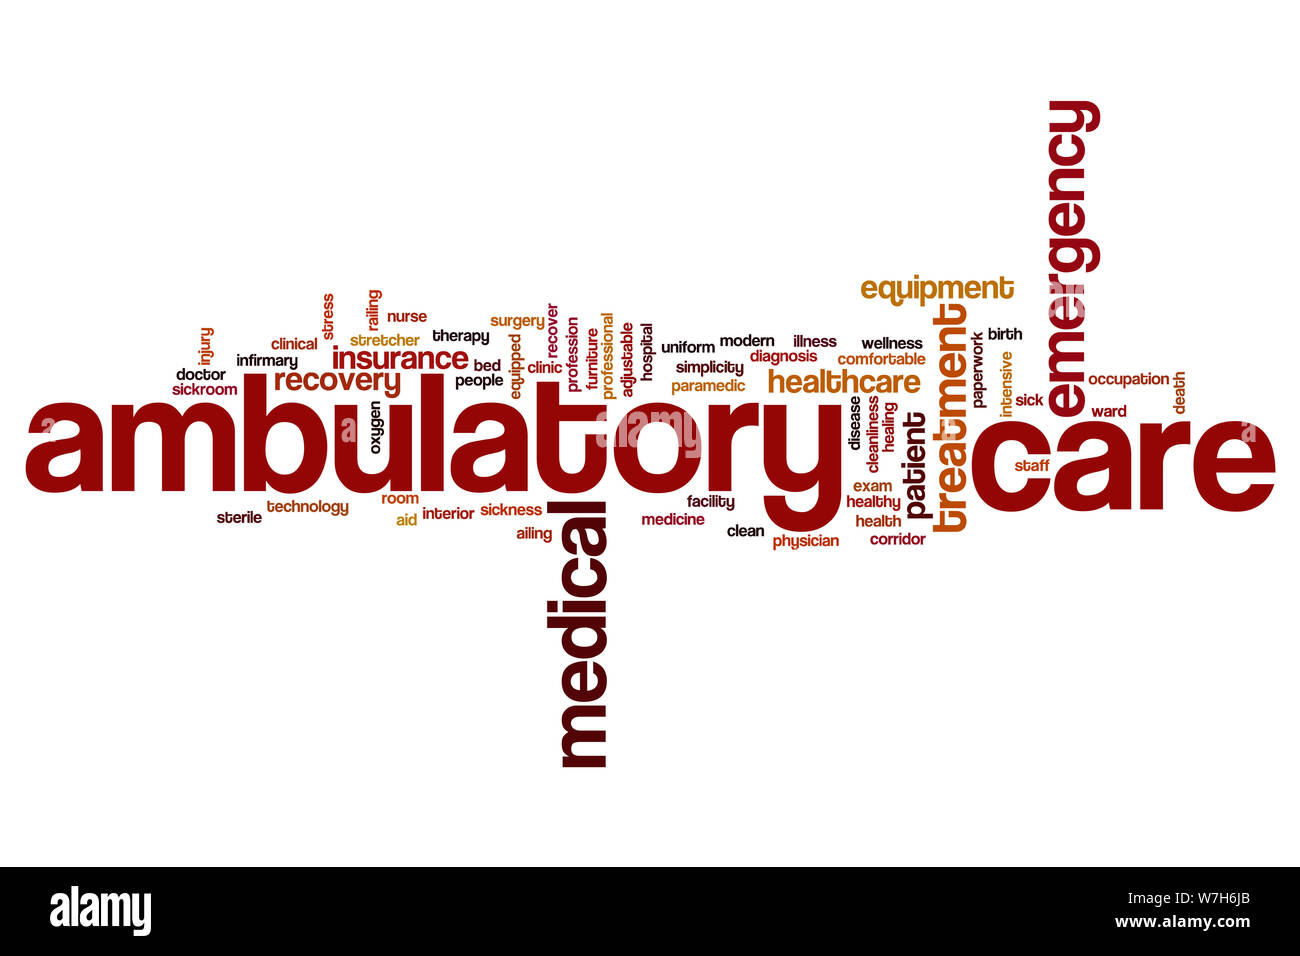 Ambulatory care word cloud concept Stock Photo